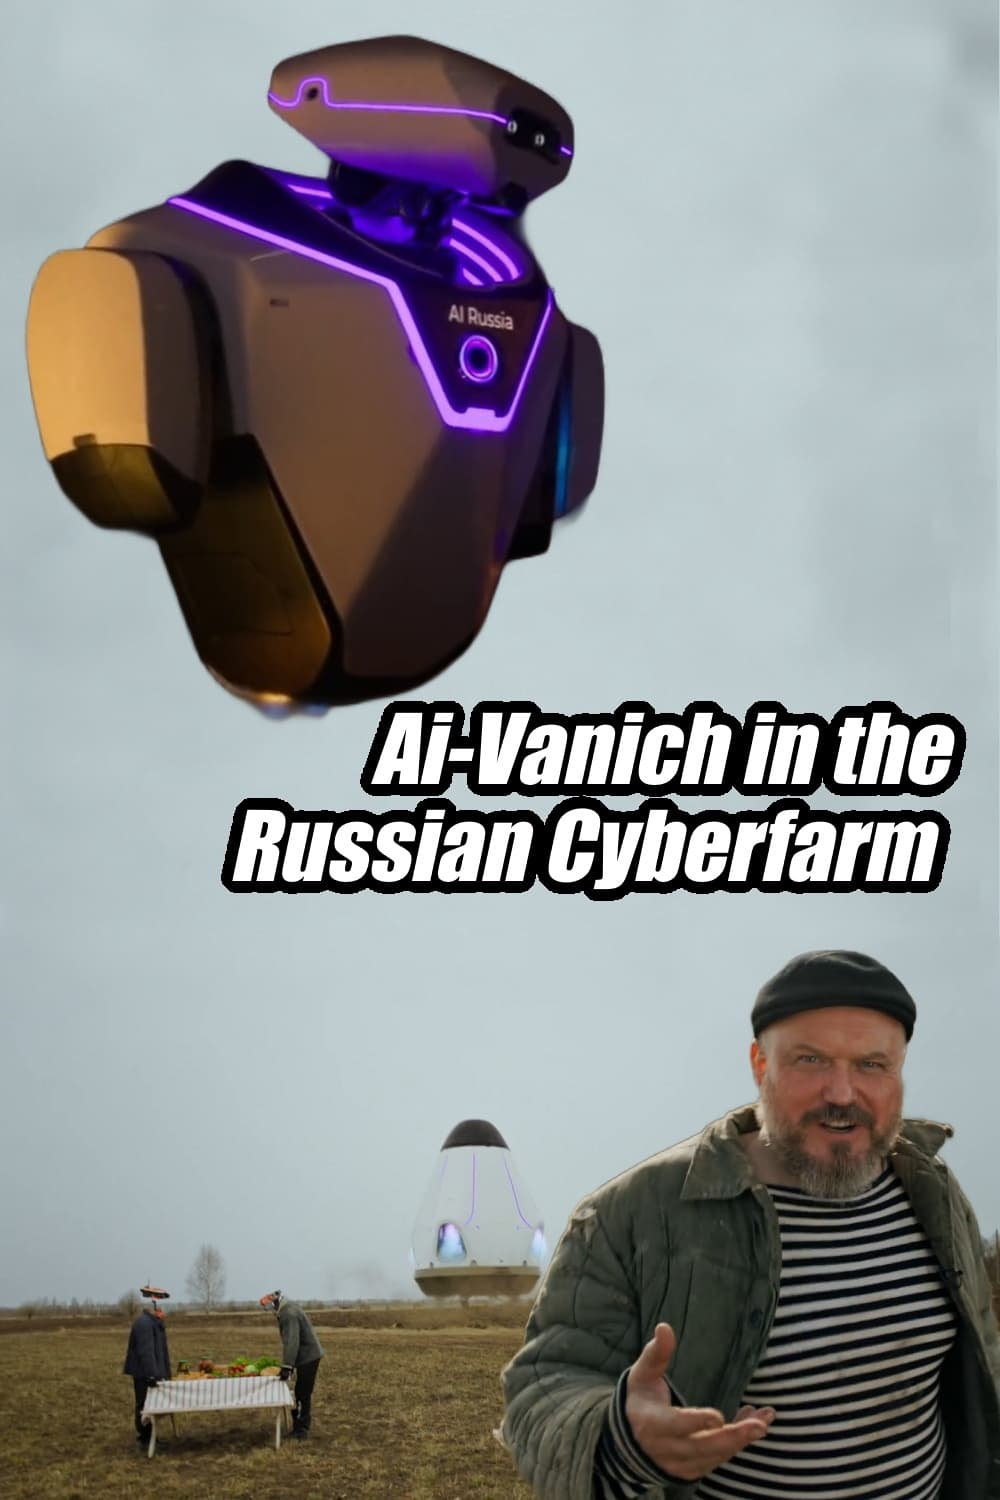 AI-Vanich in the Russian Cyberfarm